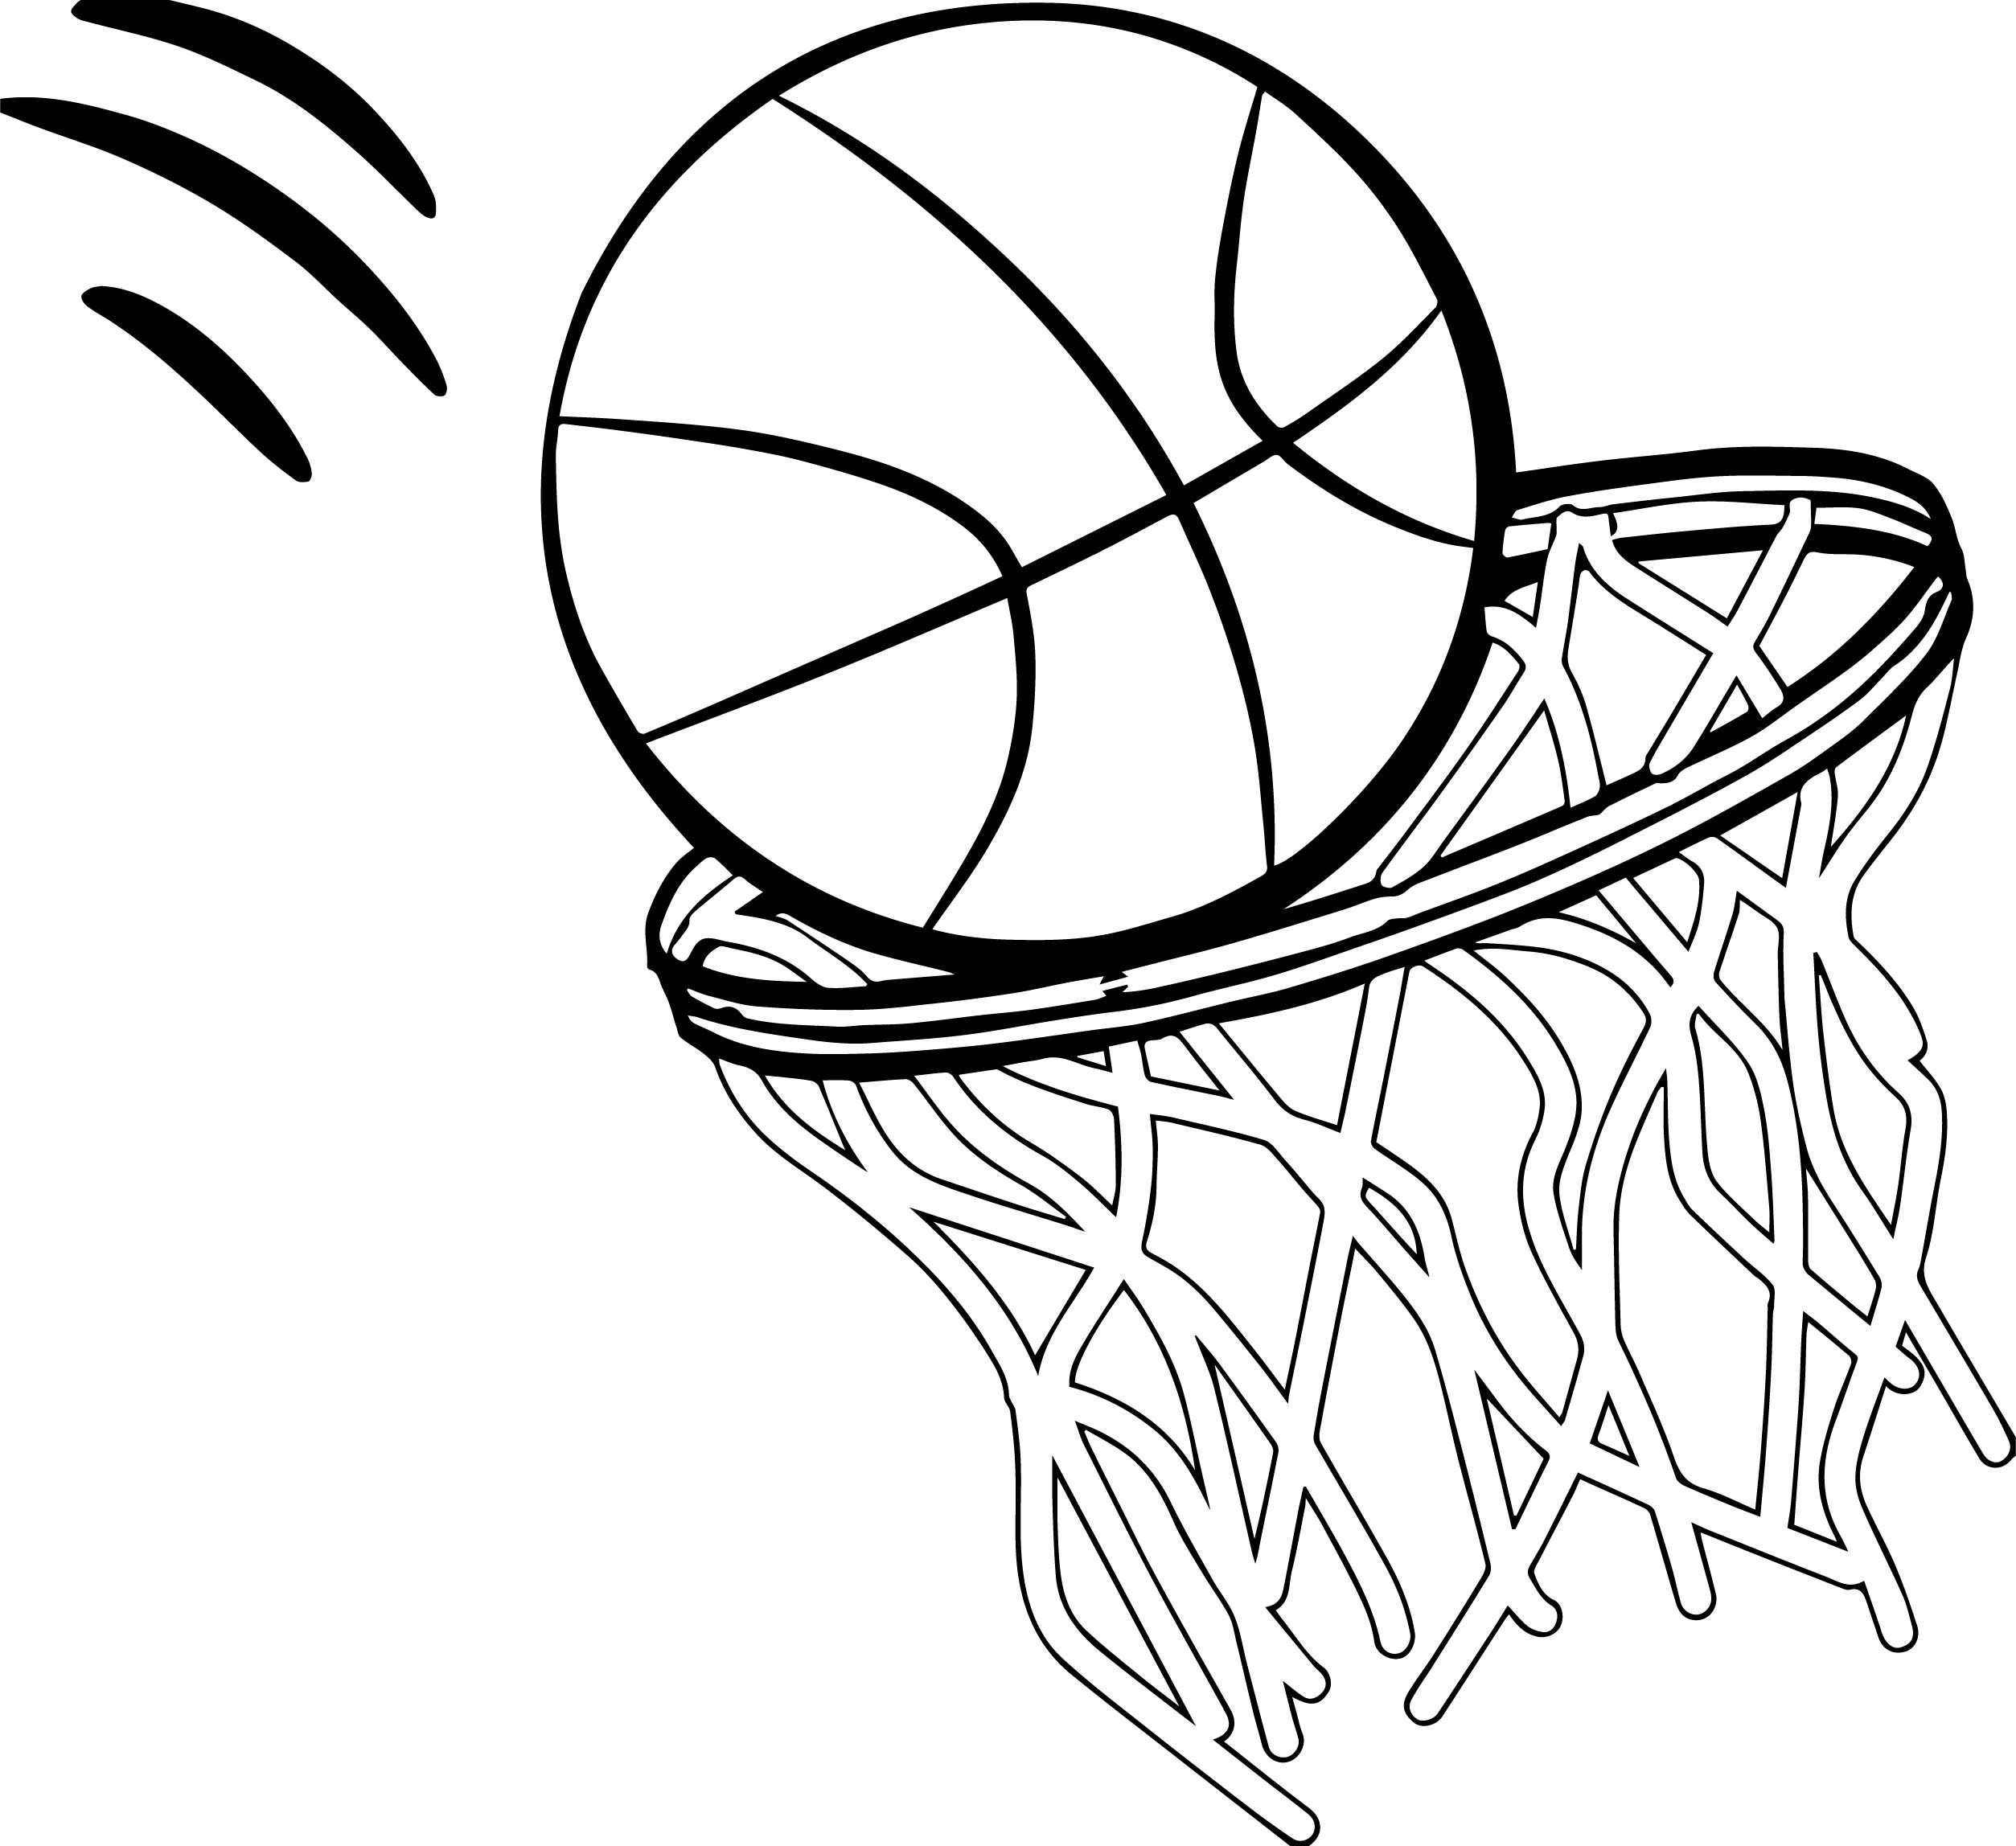 Basketball Coloring Book
 Any Basketball Free Coloring Page